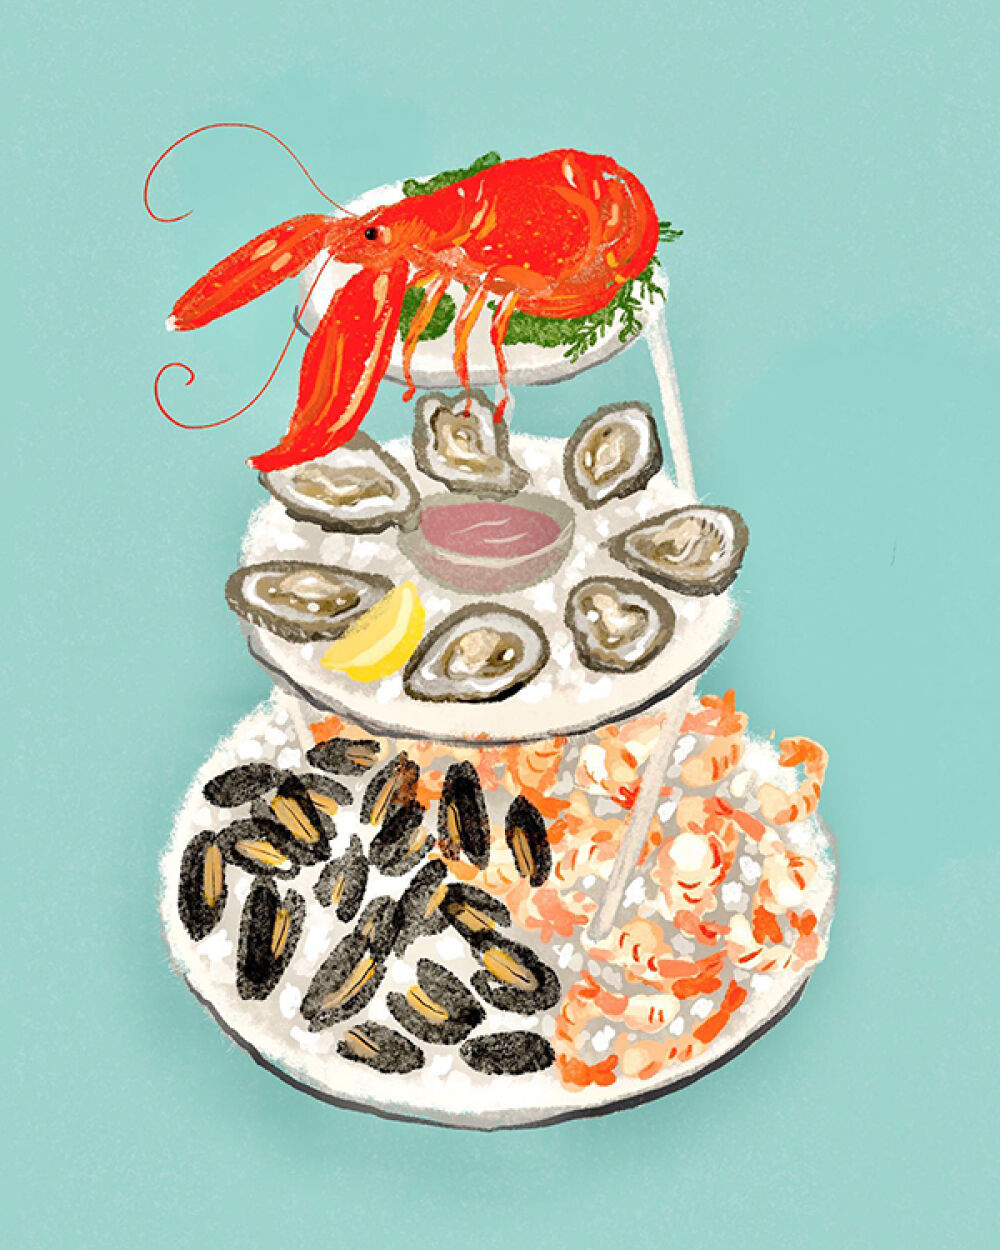 Food illustration, happy new year by Christina Gliha